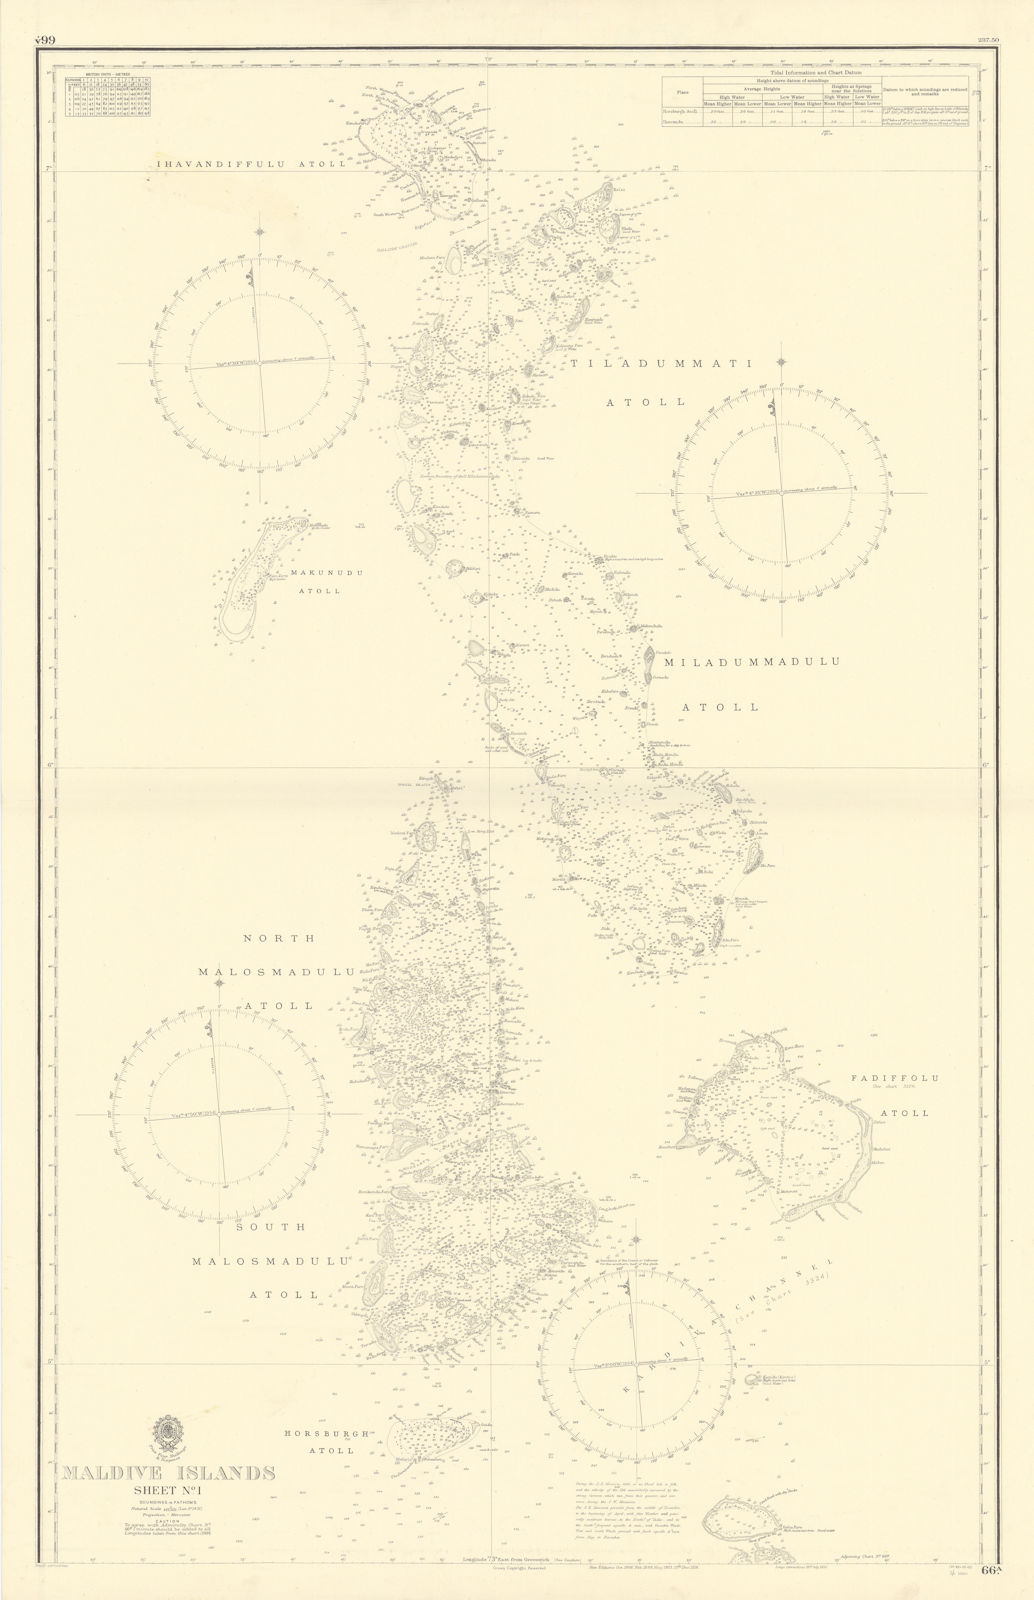 Maldive Islands #1 North Walker/EAST INDIA COMPANY sea chart 1839 (1950) map